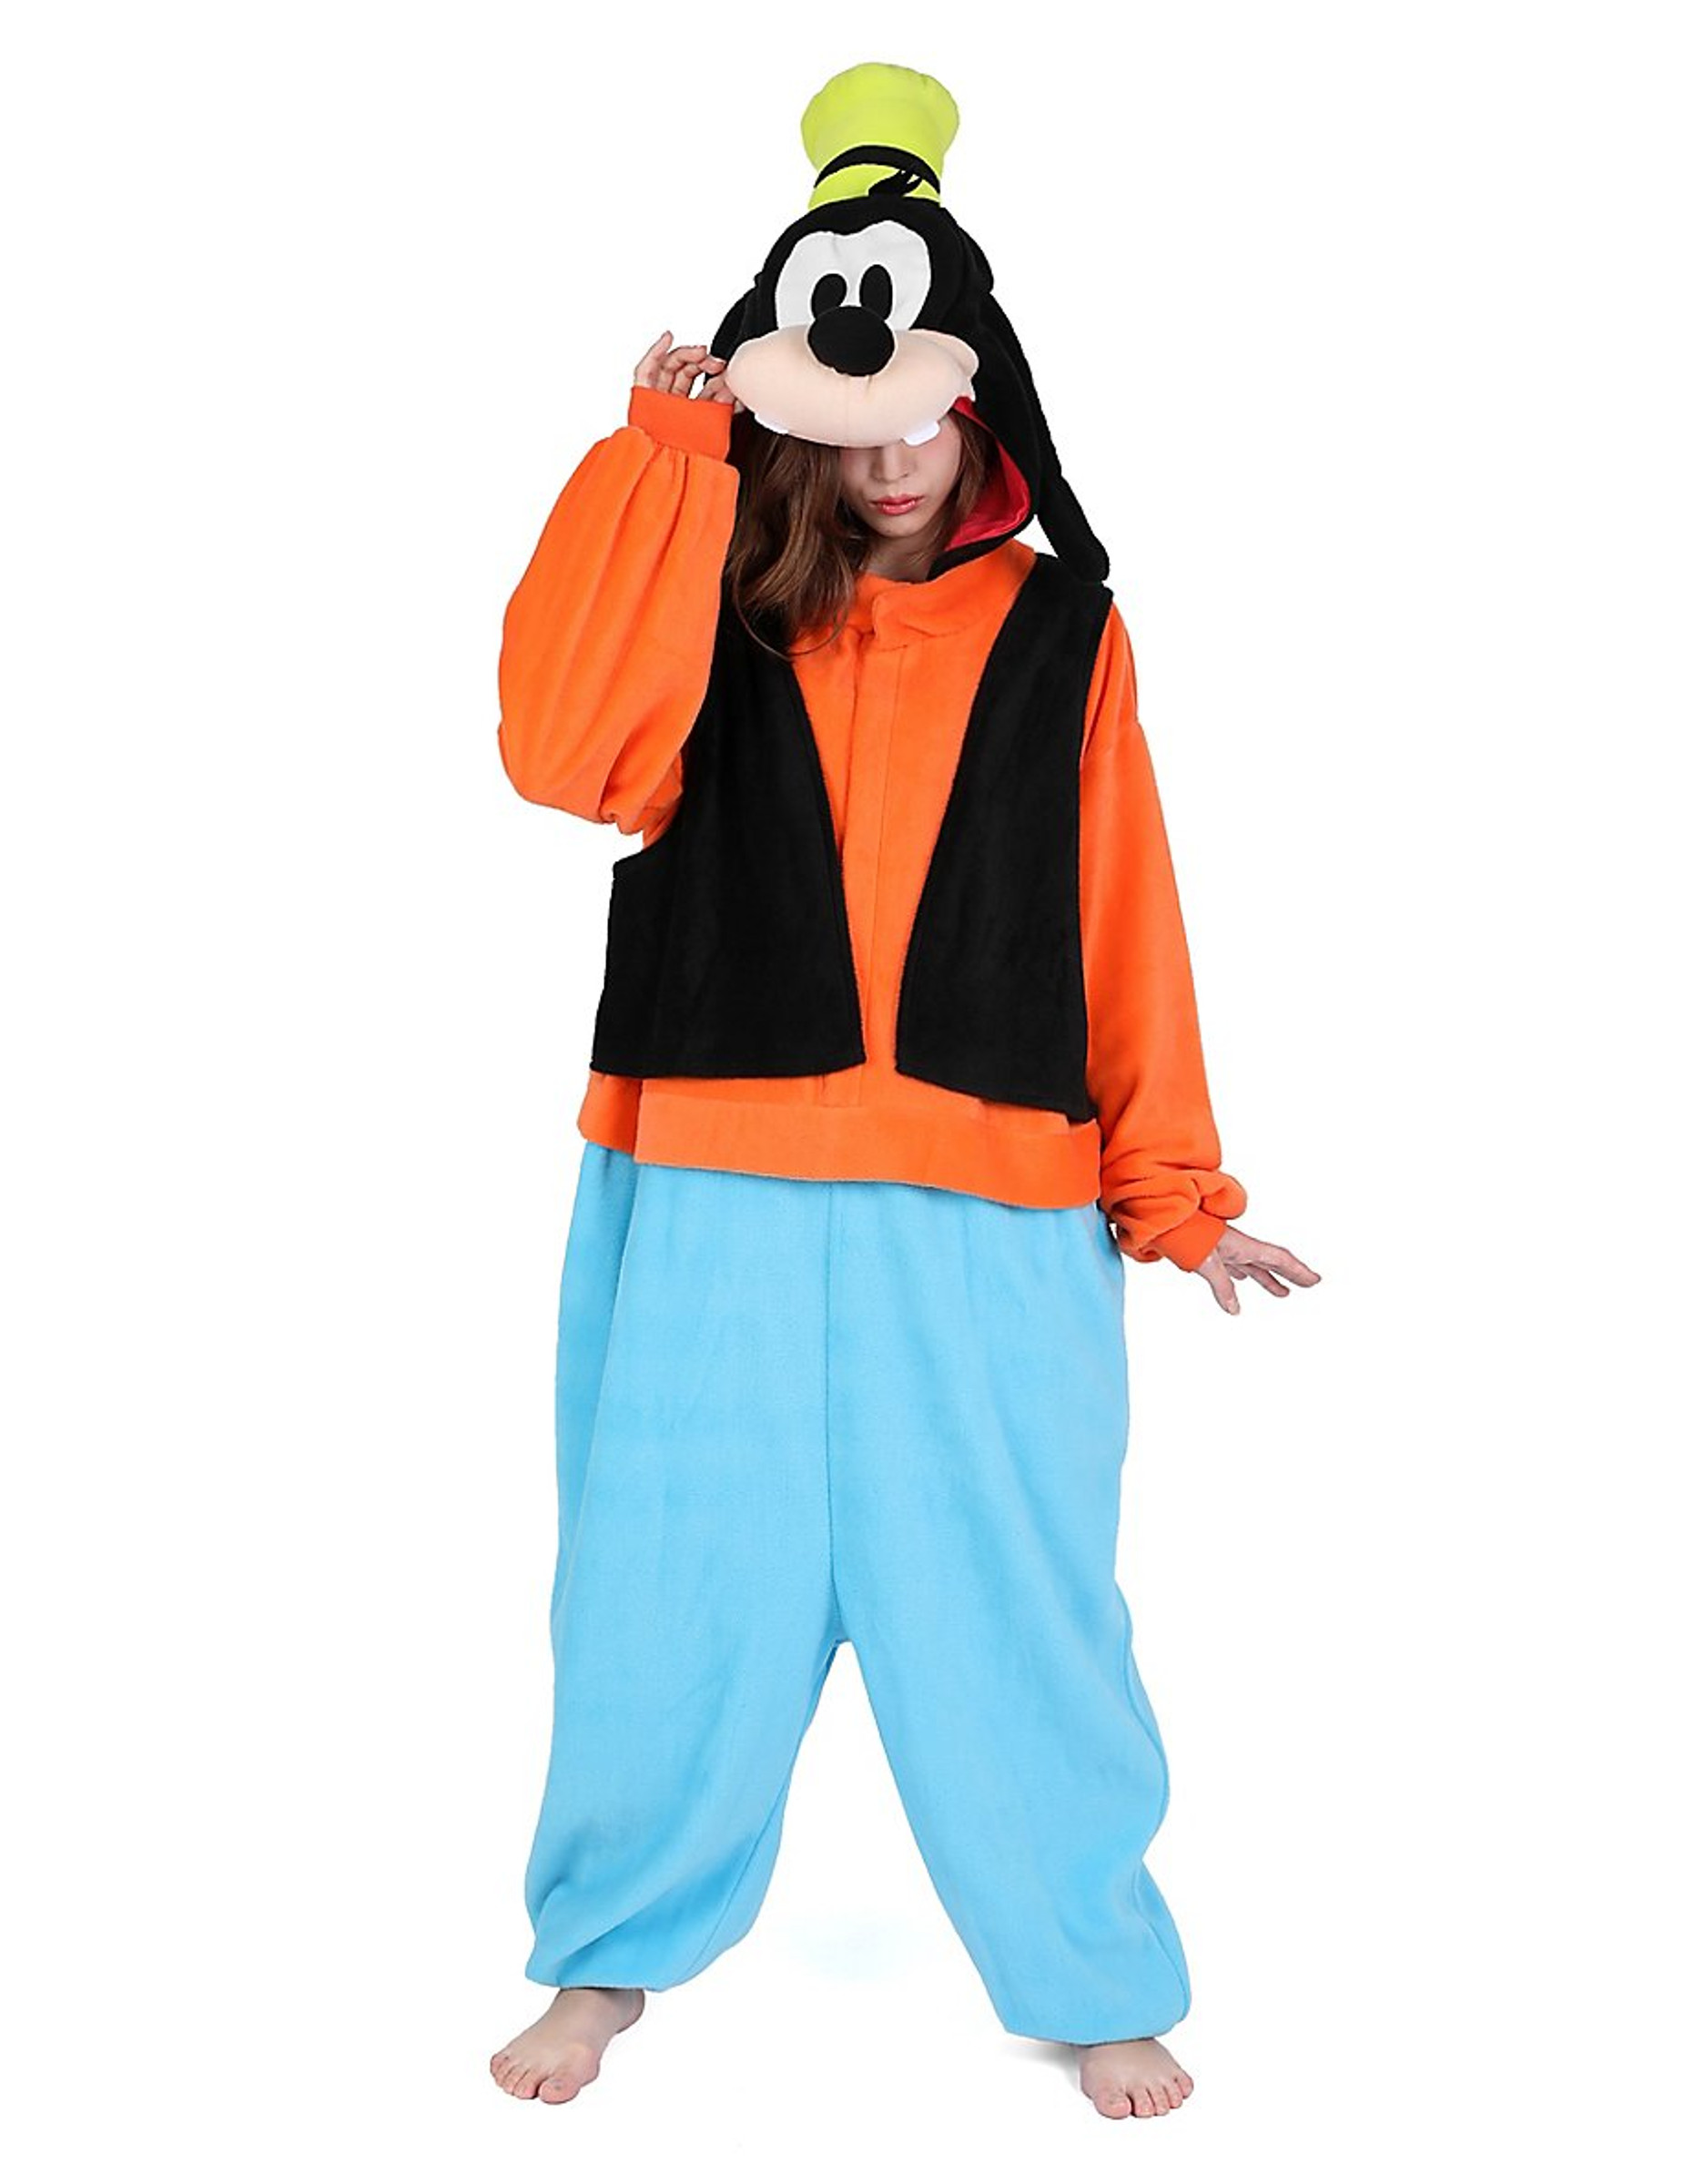 Goofy-Kostüm Kigurumi bunt von METAMORPH GmbH